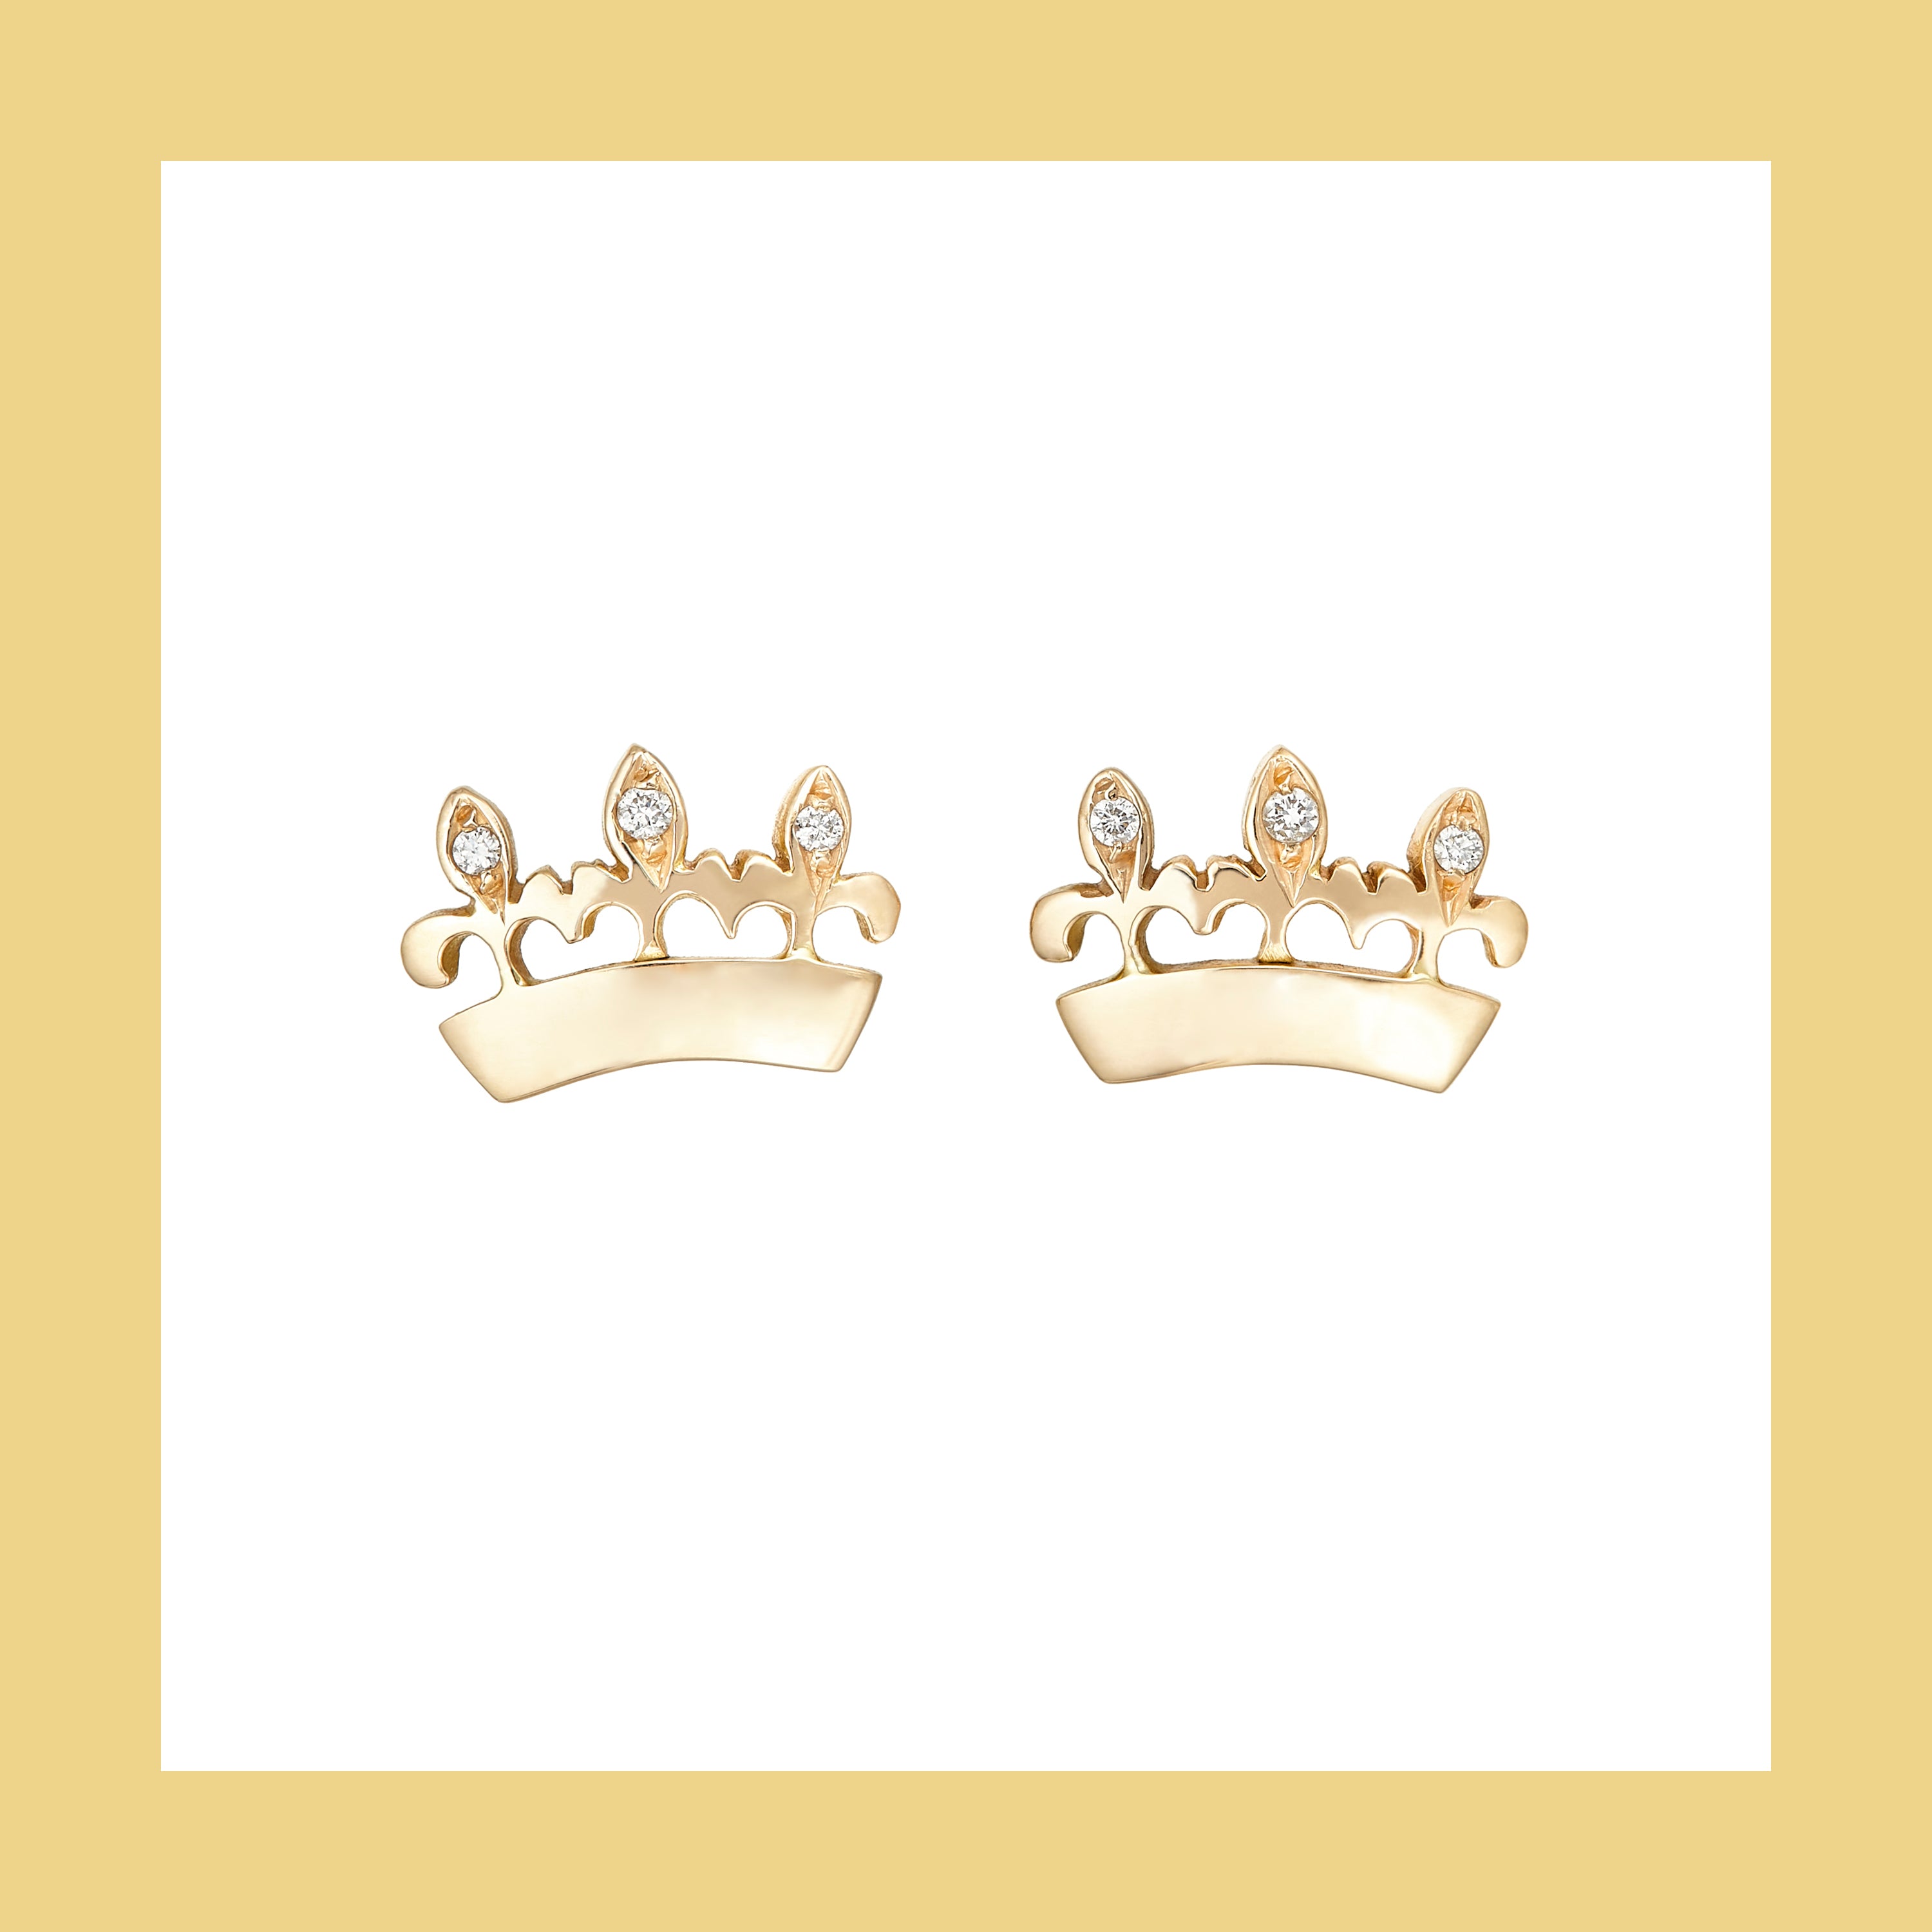 Bee Queen Crown Earrings with diamonds